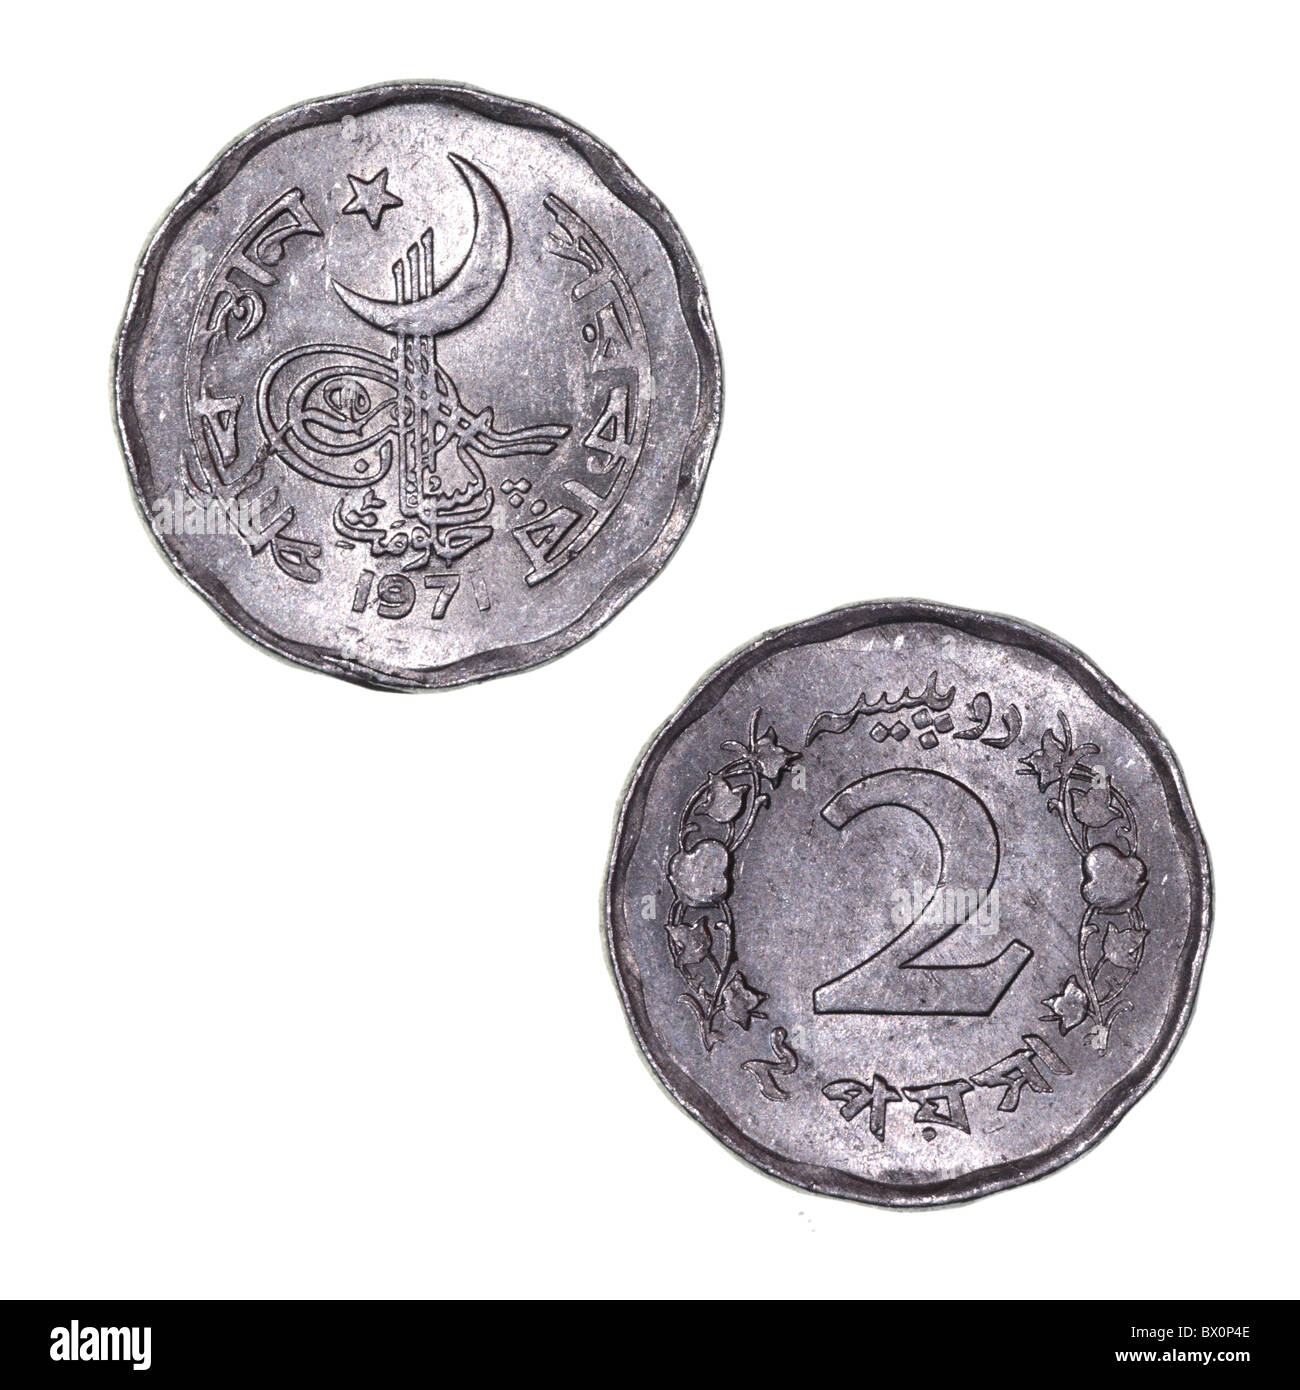 Pakistan coin Stock Photo